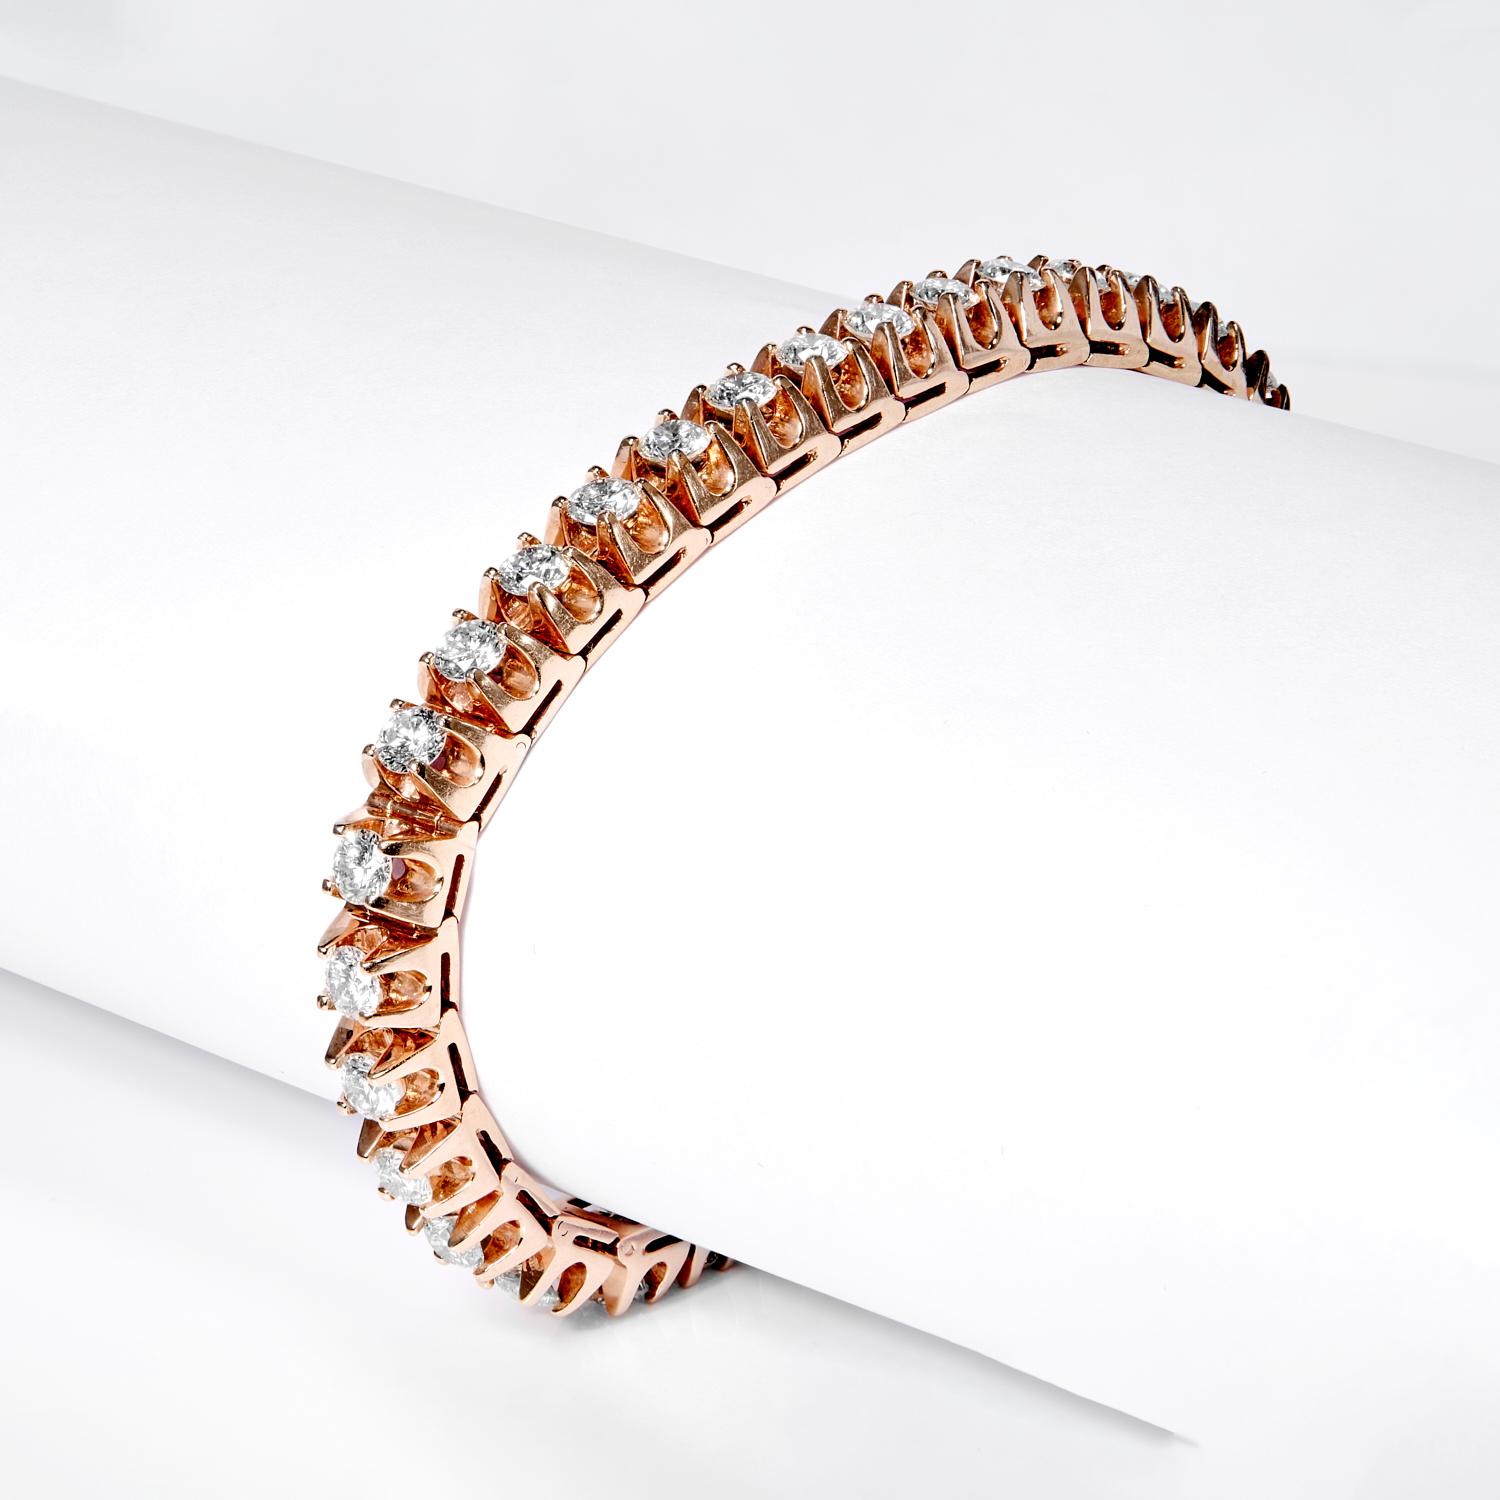 11 carat diamond tennis bracelet